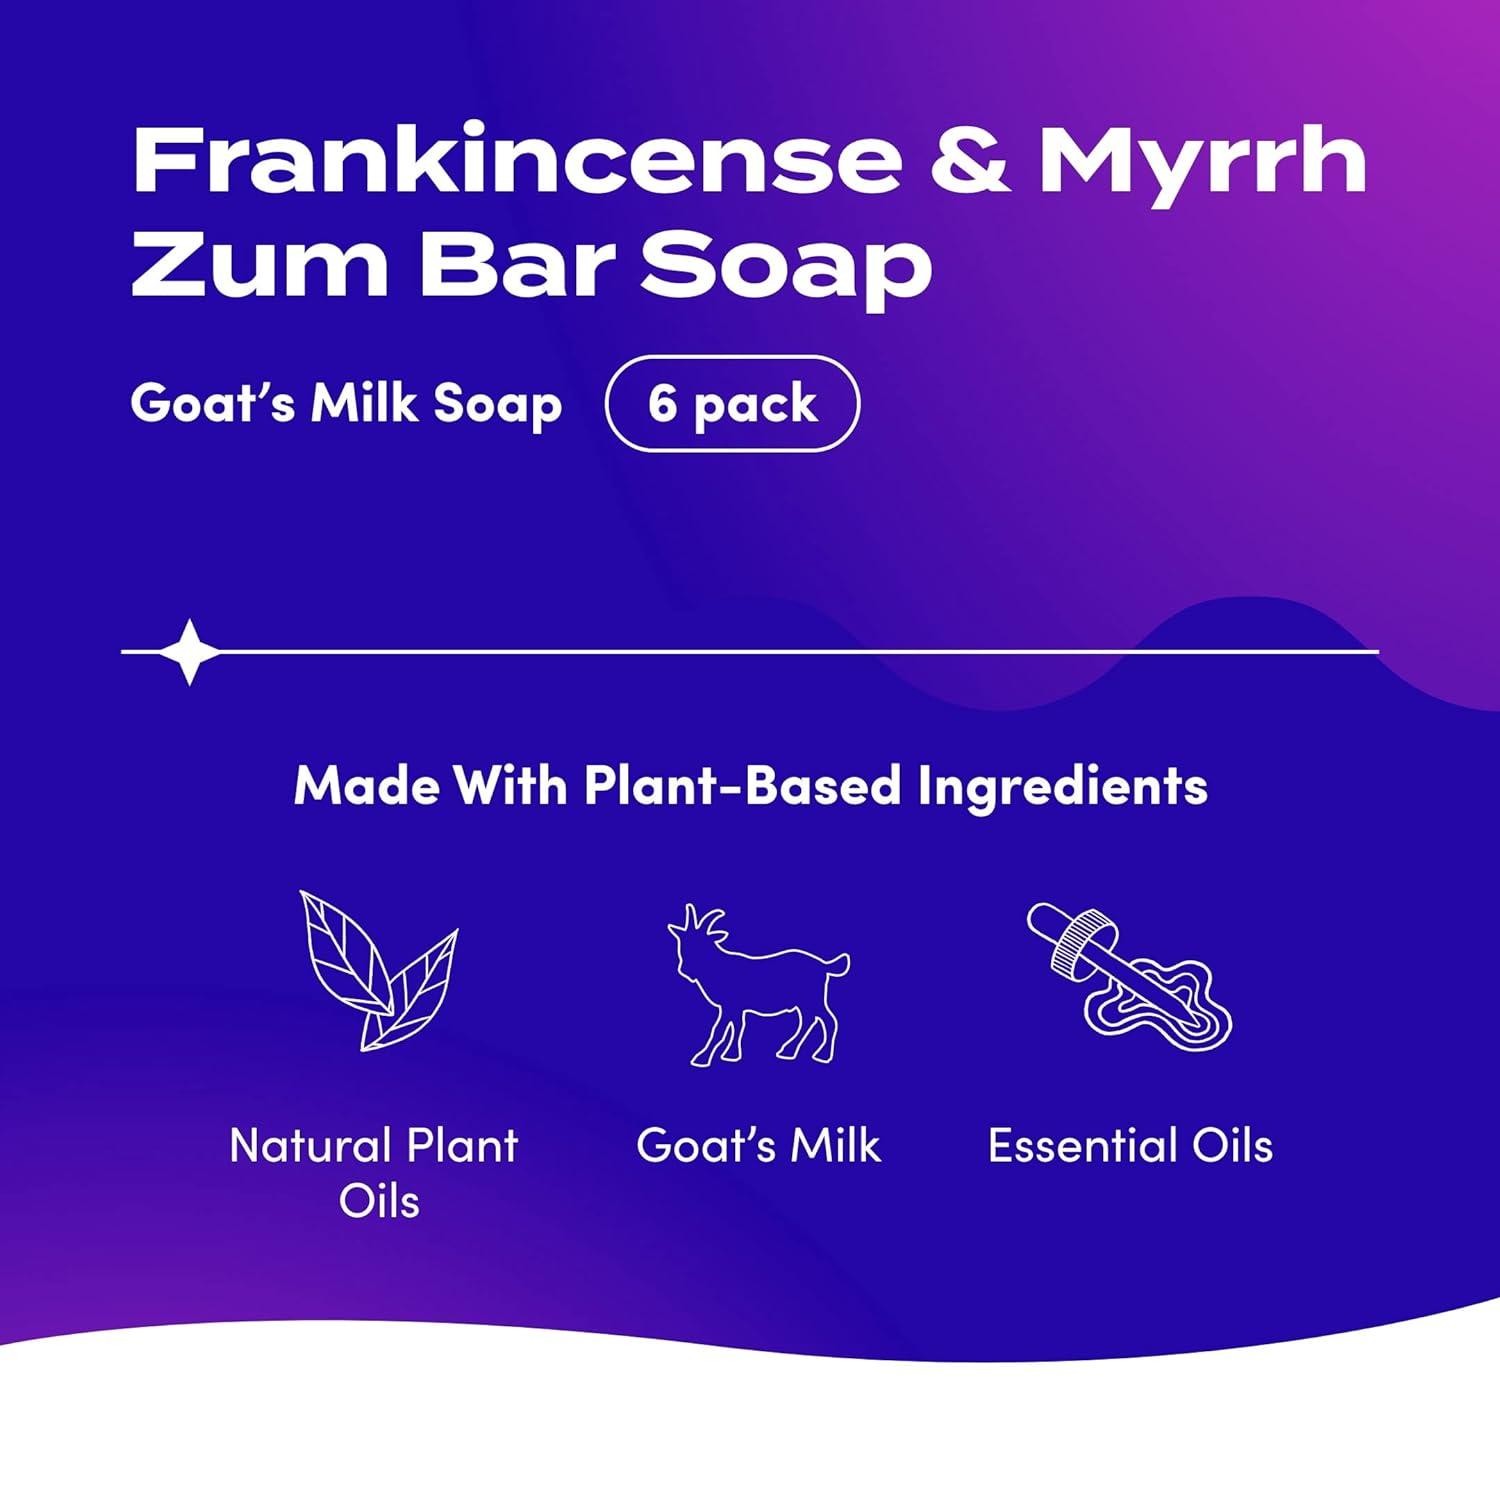 Zum Bar Goat's Milk Soap - Frankincense and Myrrh - 3 oz (3 Pack) 